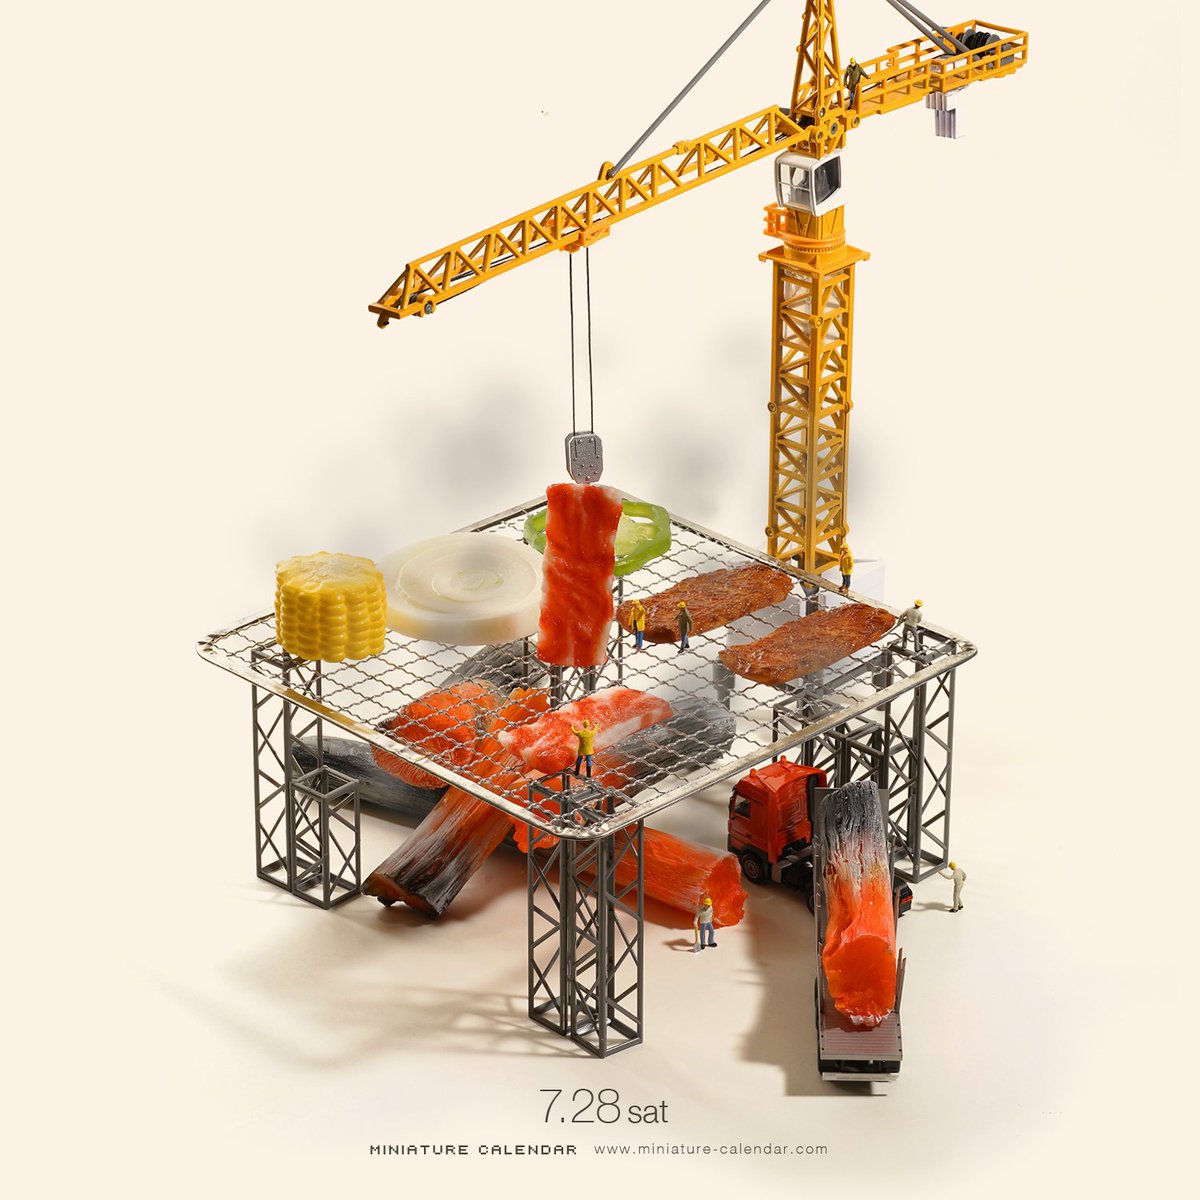 no humans white background ground vehicle crane (machine) watermark simple background food  illustration images